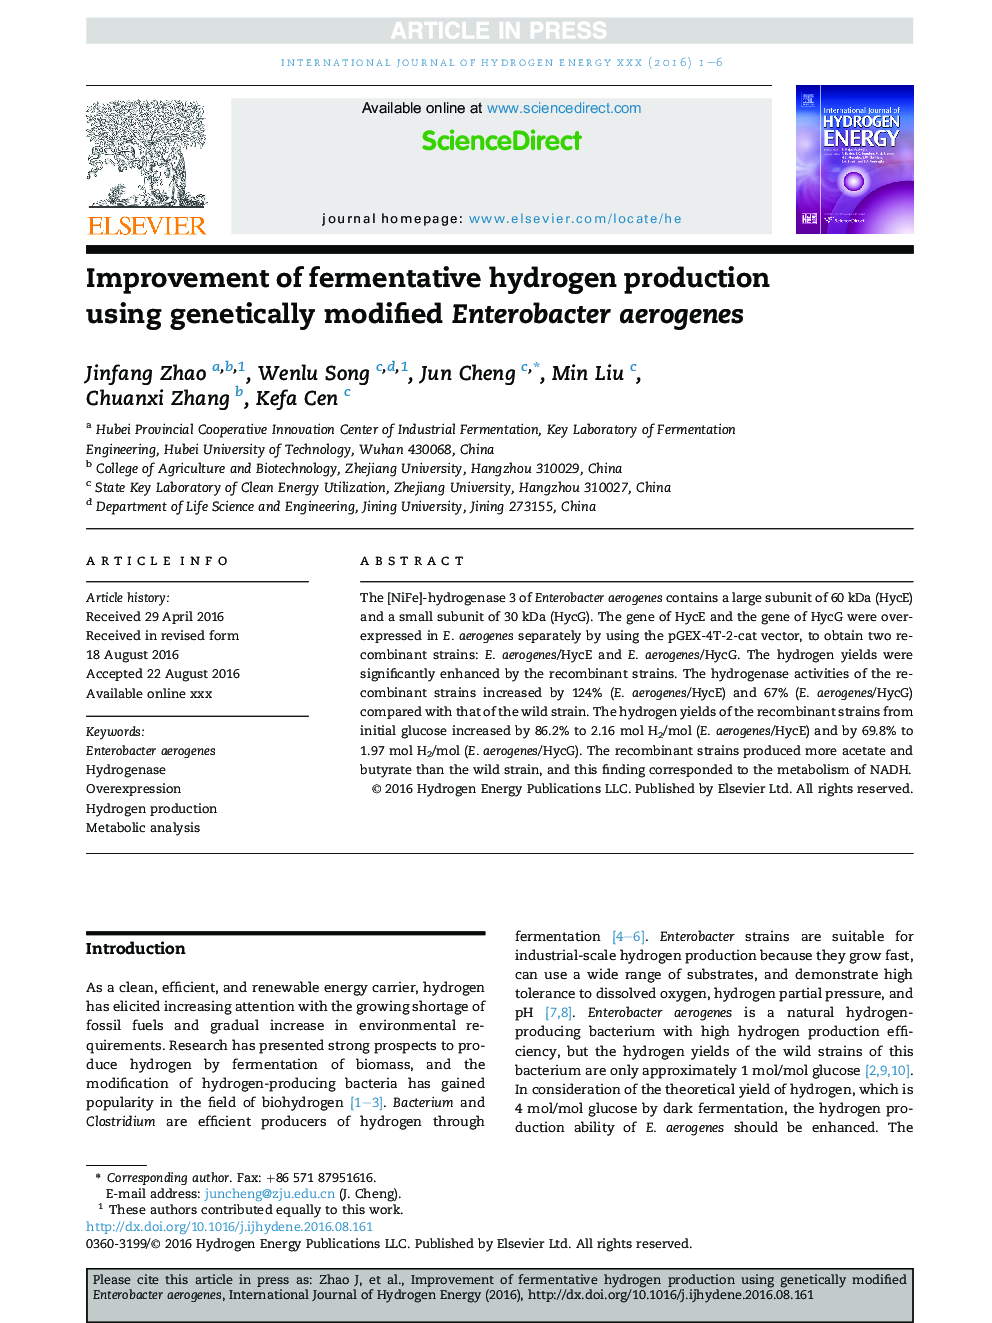 Improvement of fermentative hydrogen production using genetically modified Enterobacter aerogenes